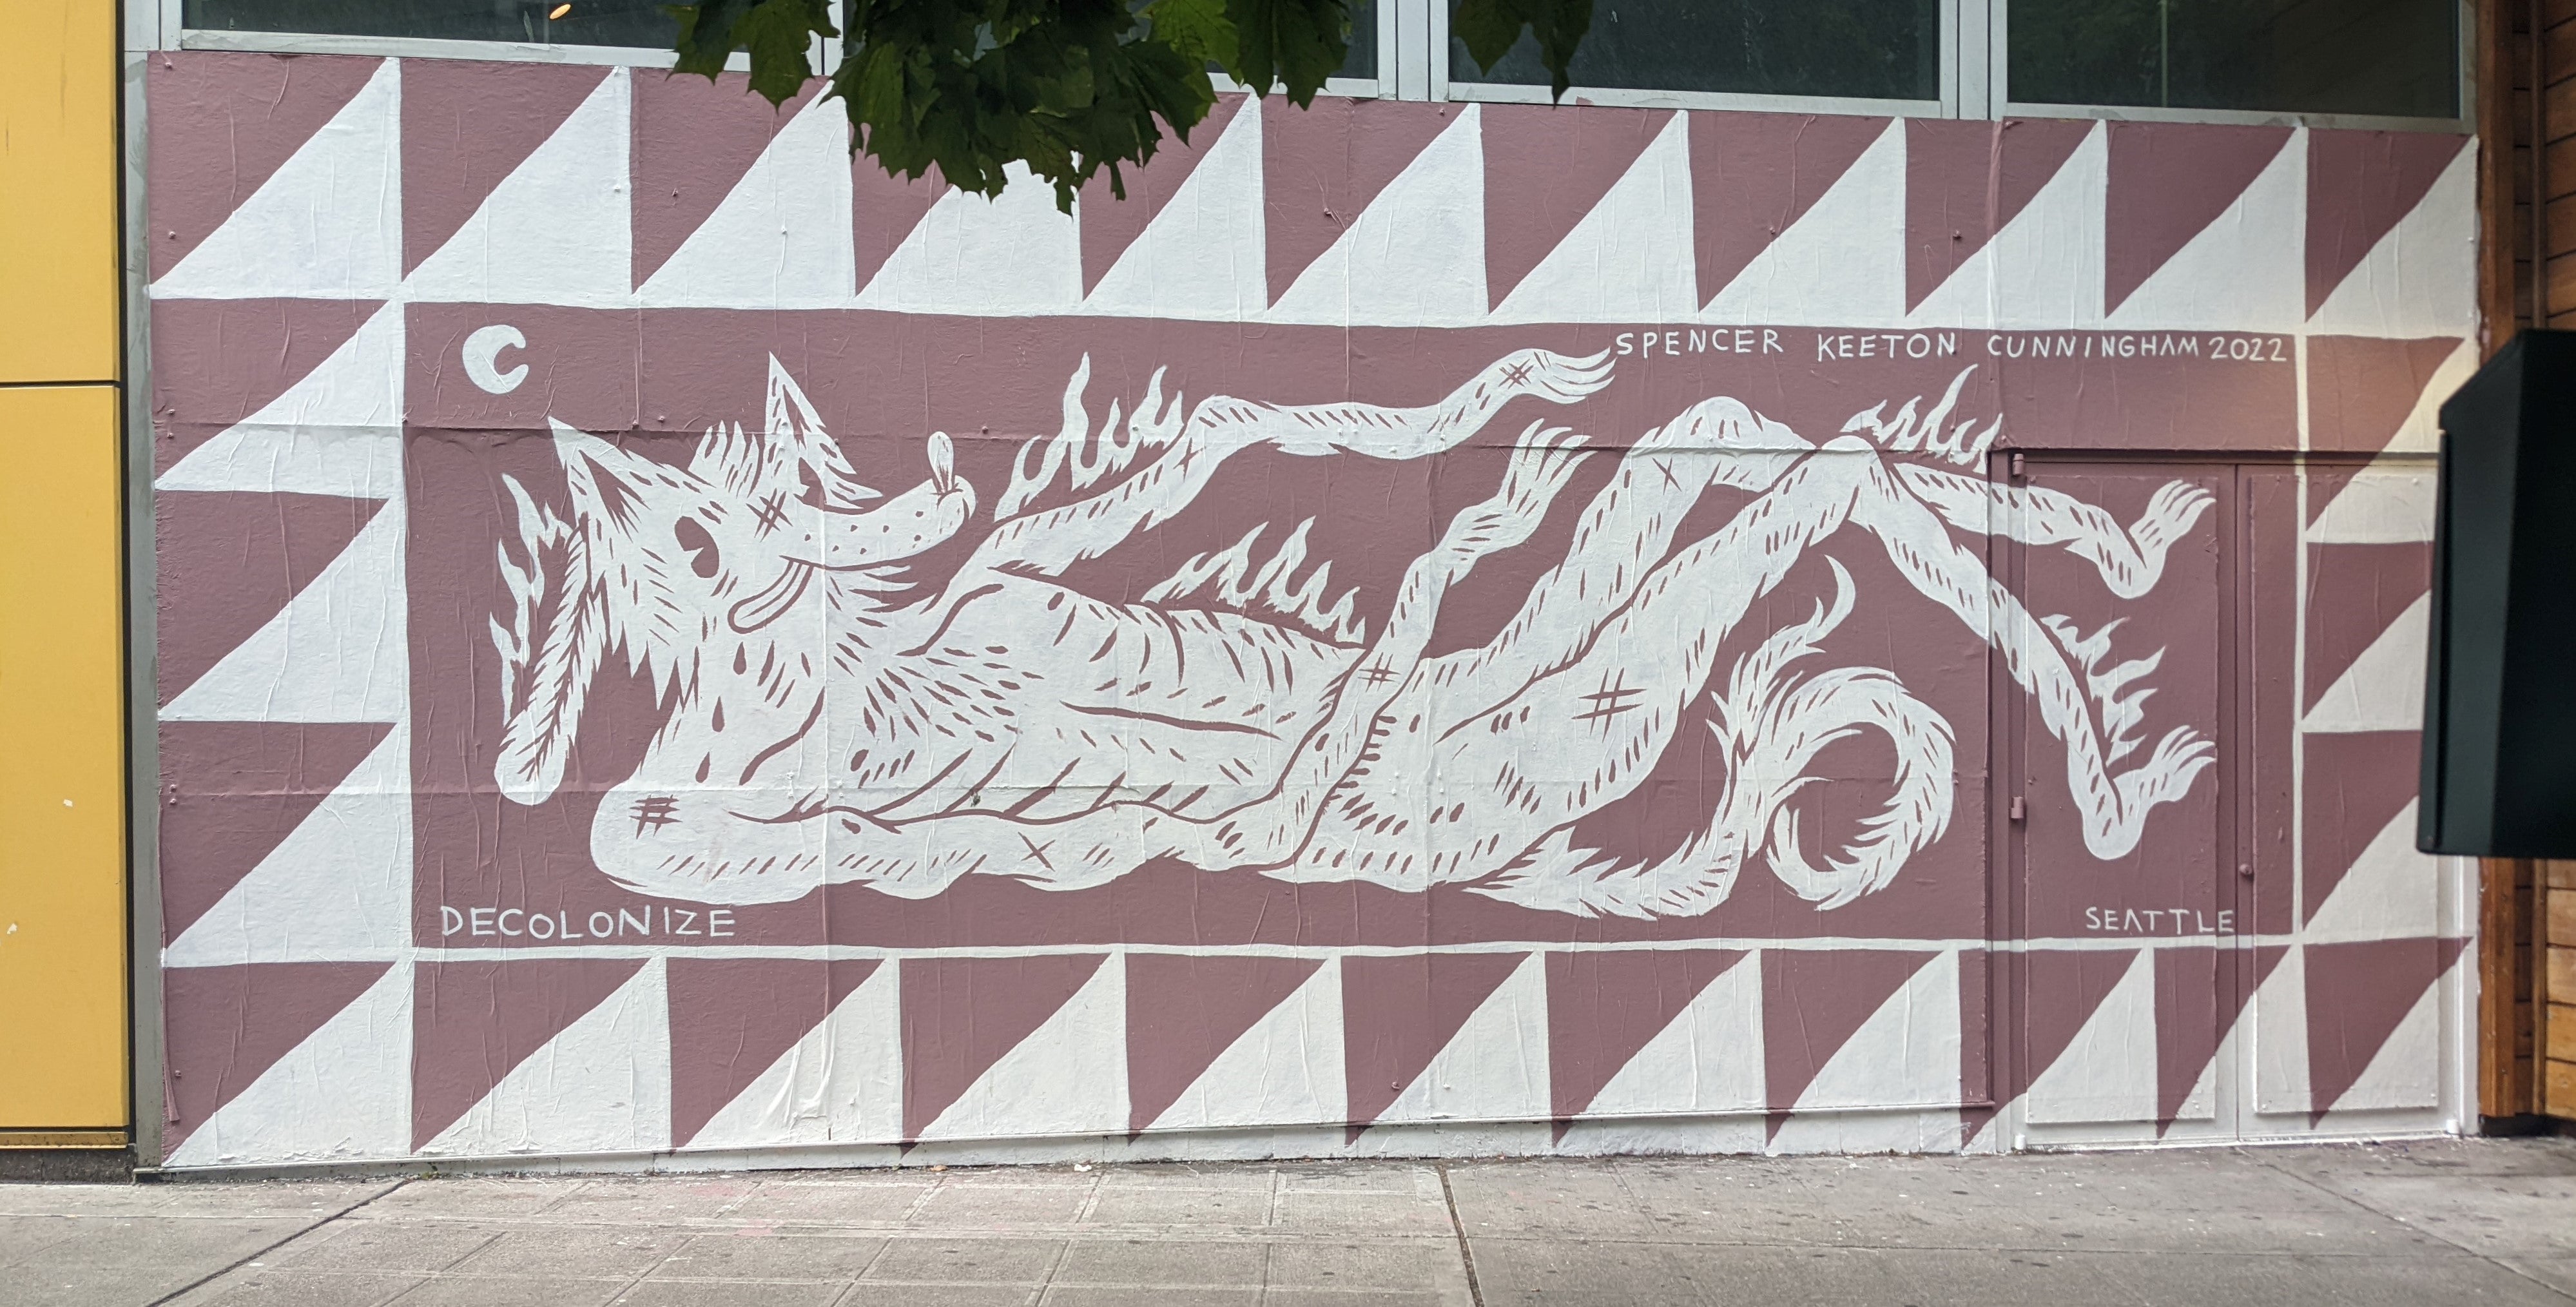 Photograph of a wall mural featuring a fox reposing